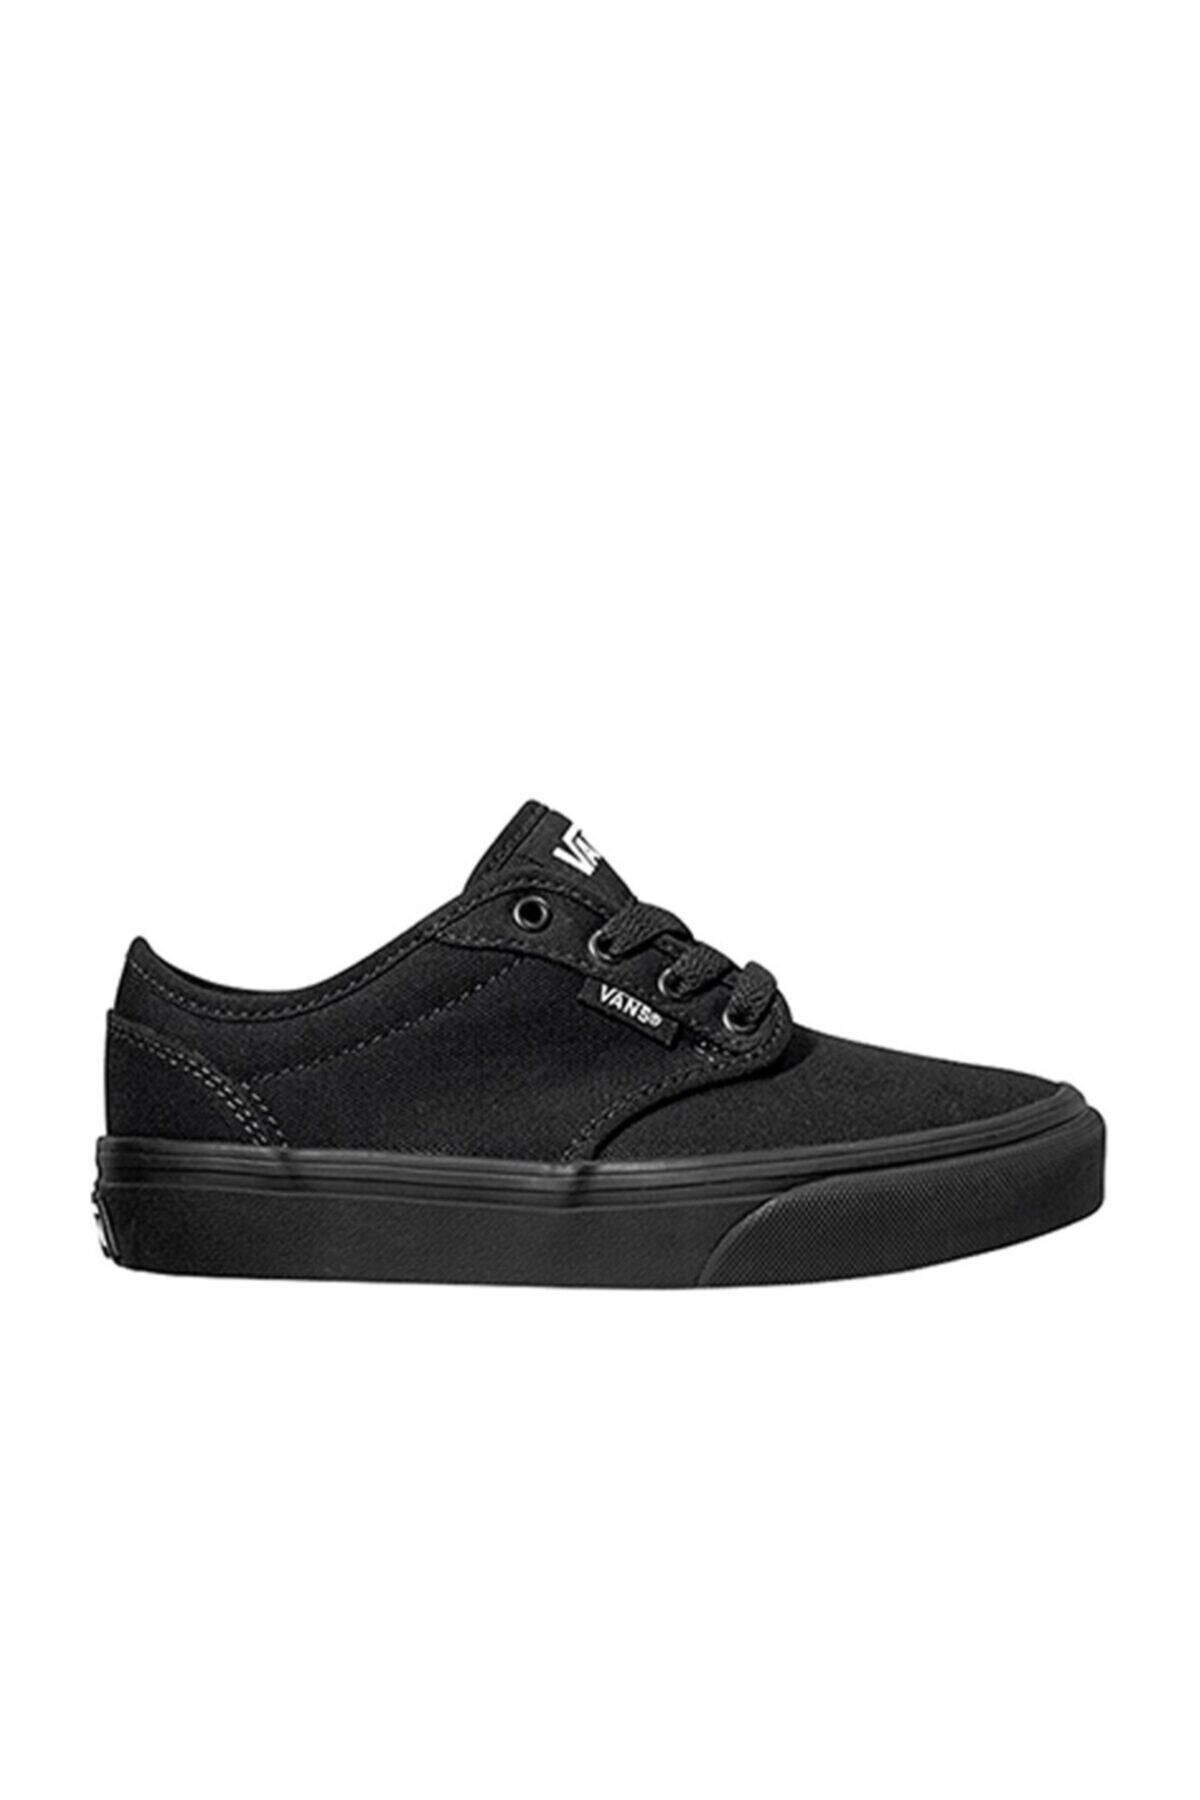 Vans Atwood Siyah Kadın Sneaker Ayakkabı